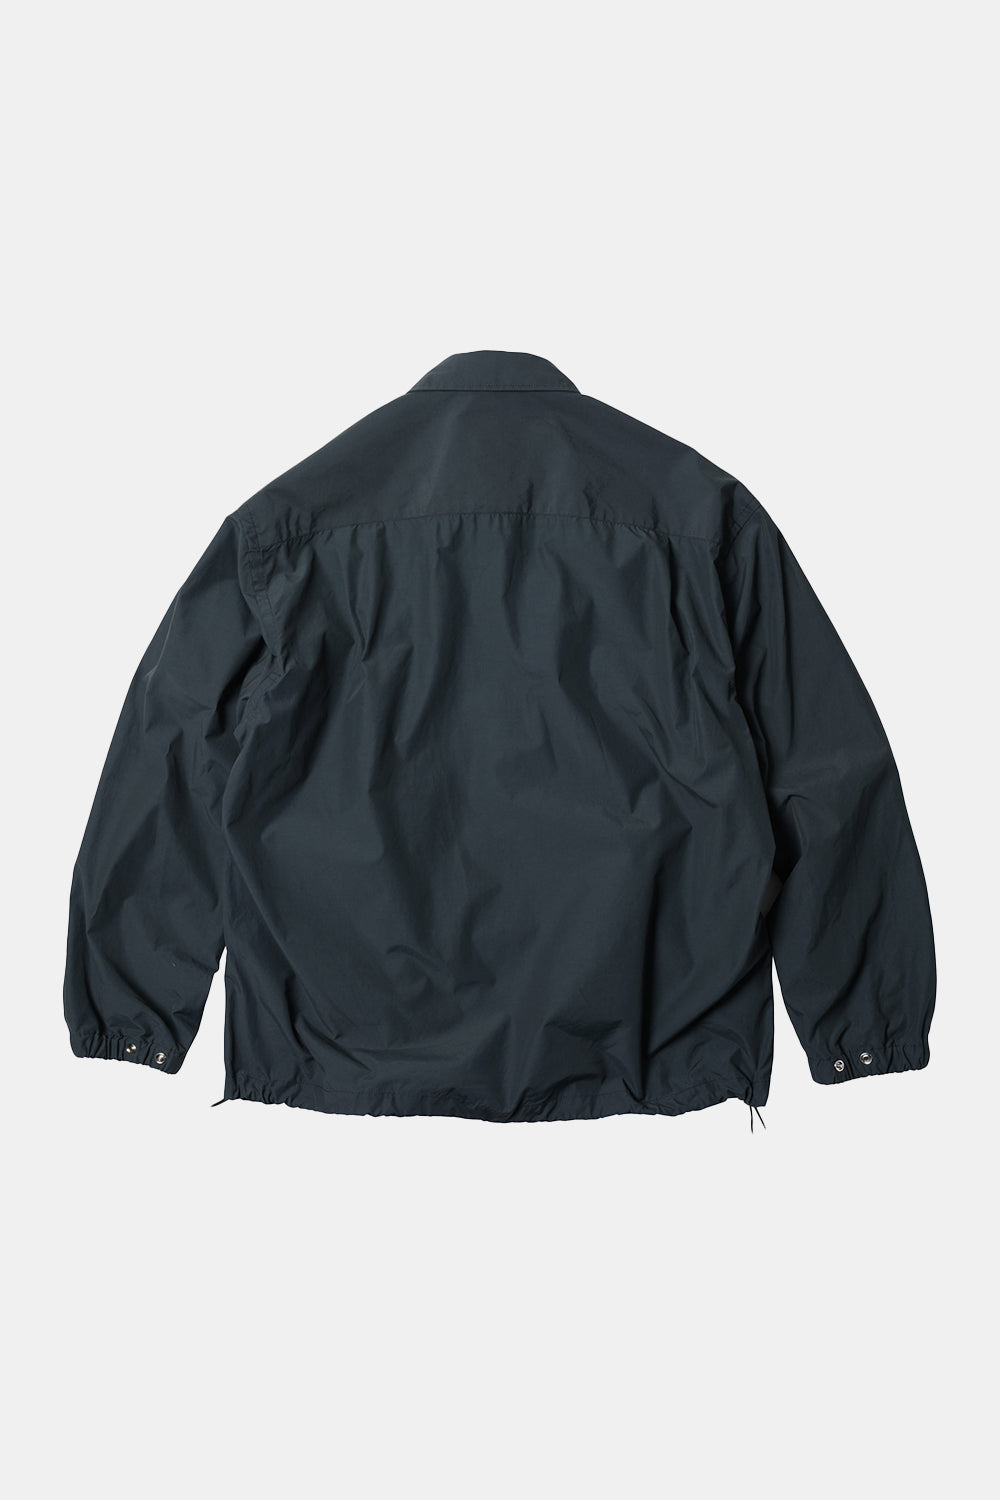 Frizmworks Nylon String Shirt Jacket (Teal)